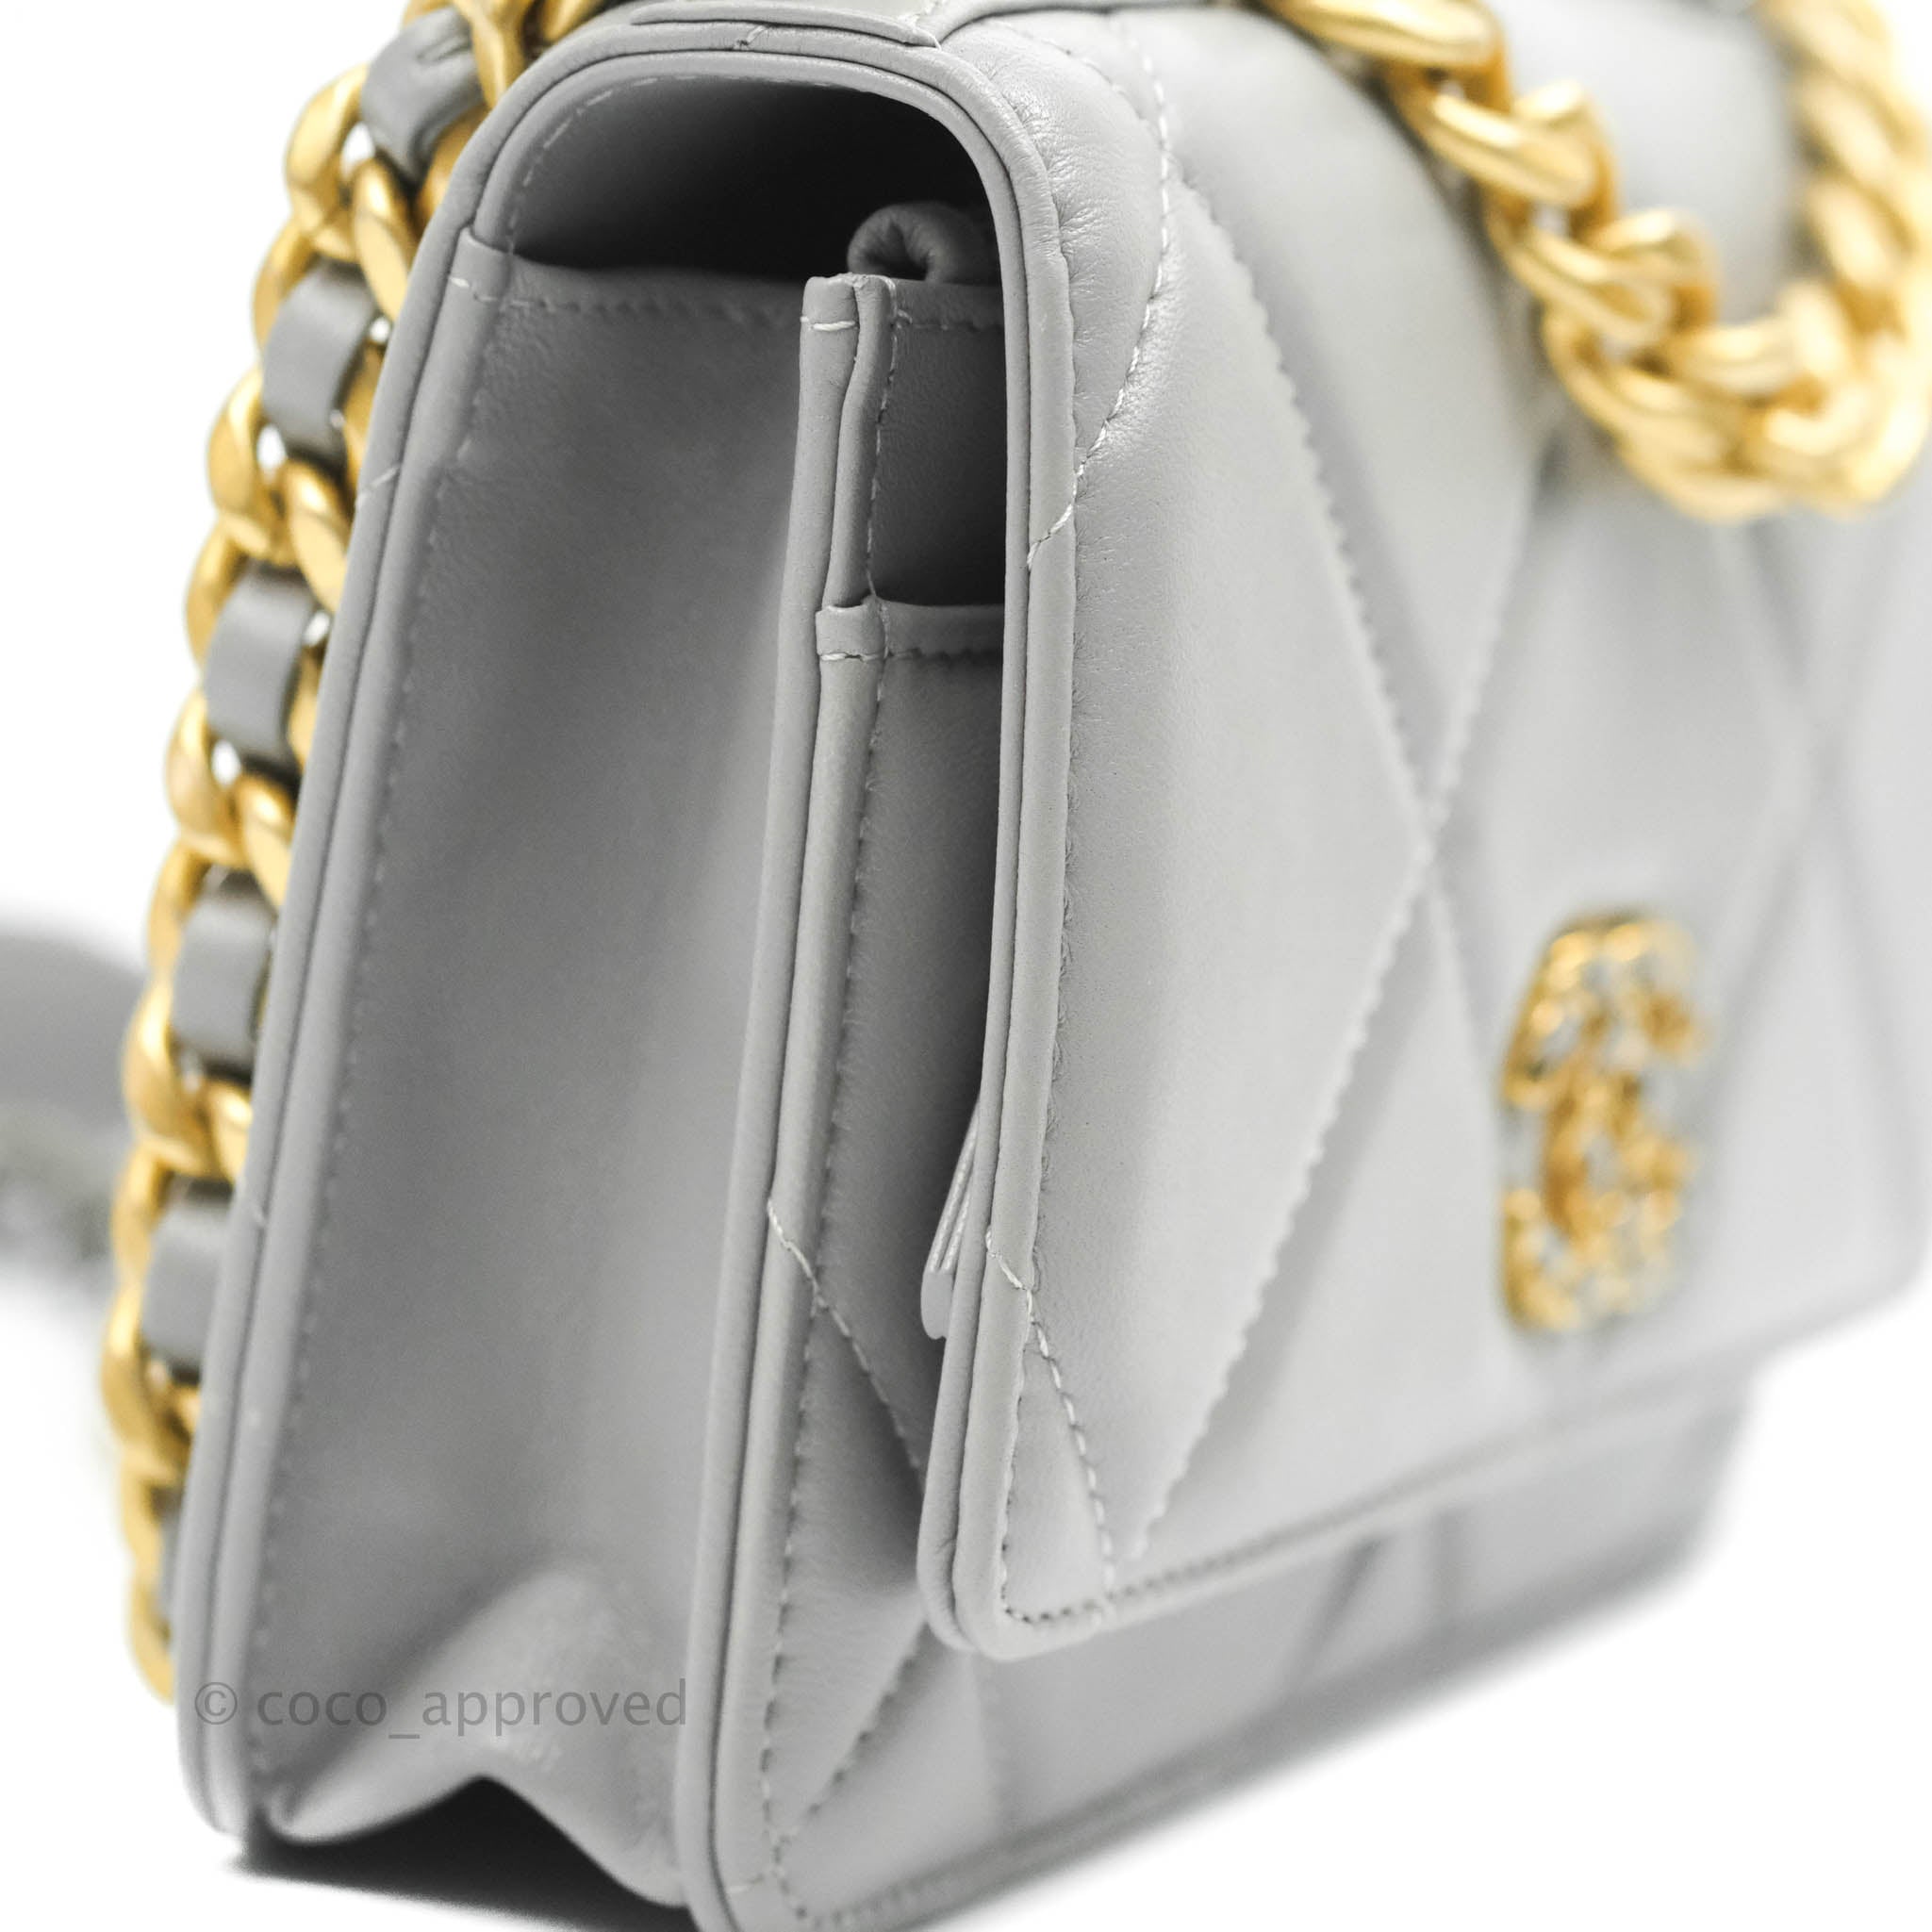 Chanel 19 wallet on chain - Shiny lambskin, gold-tone, silver-tone